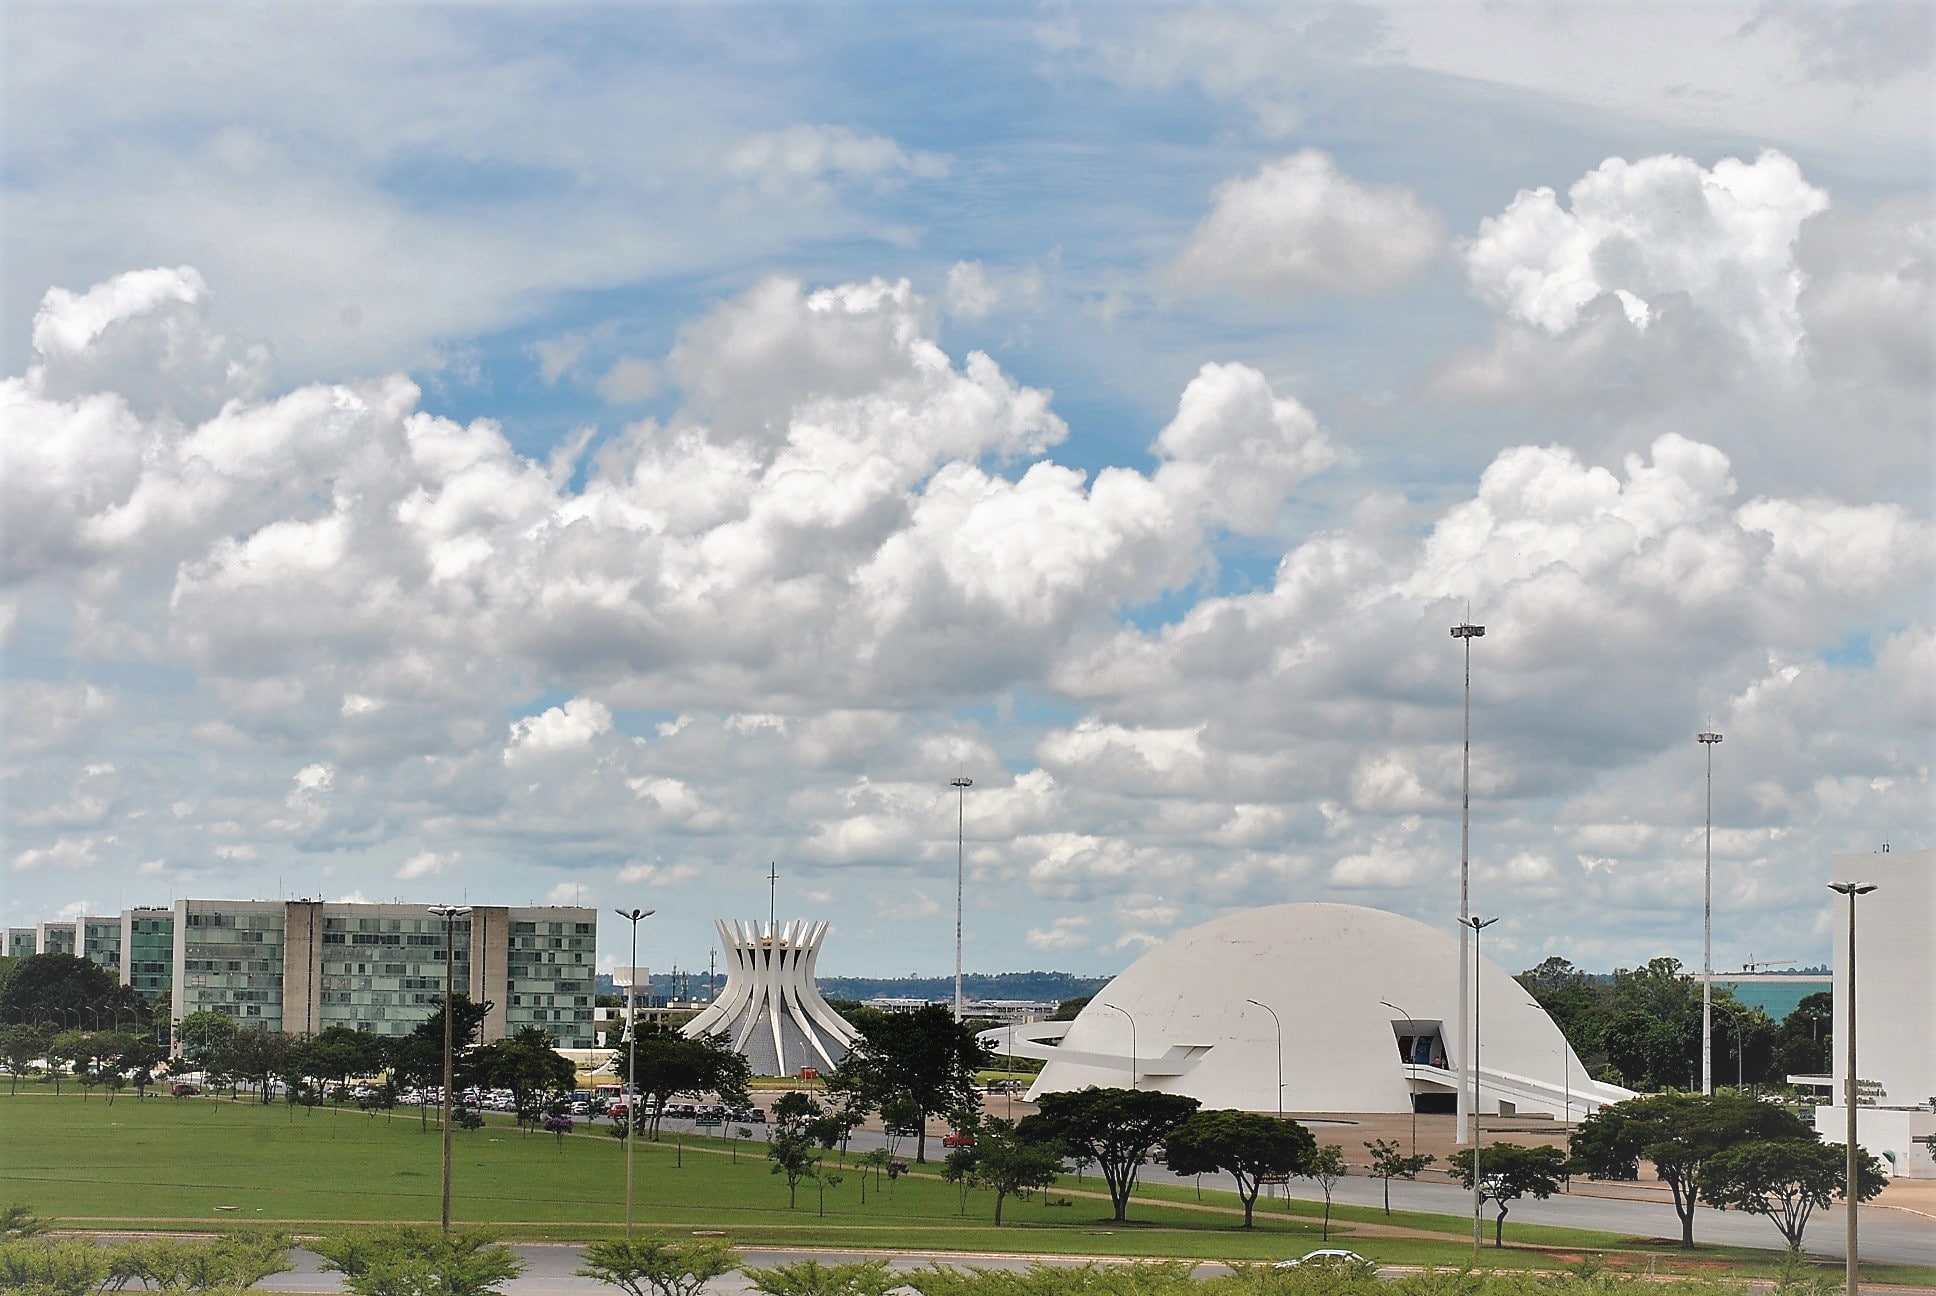 Visite Brasília no Carnaval